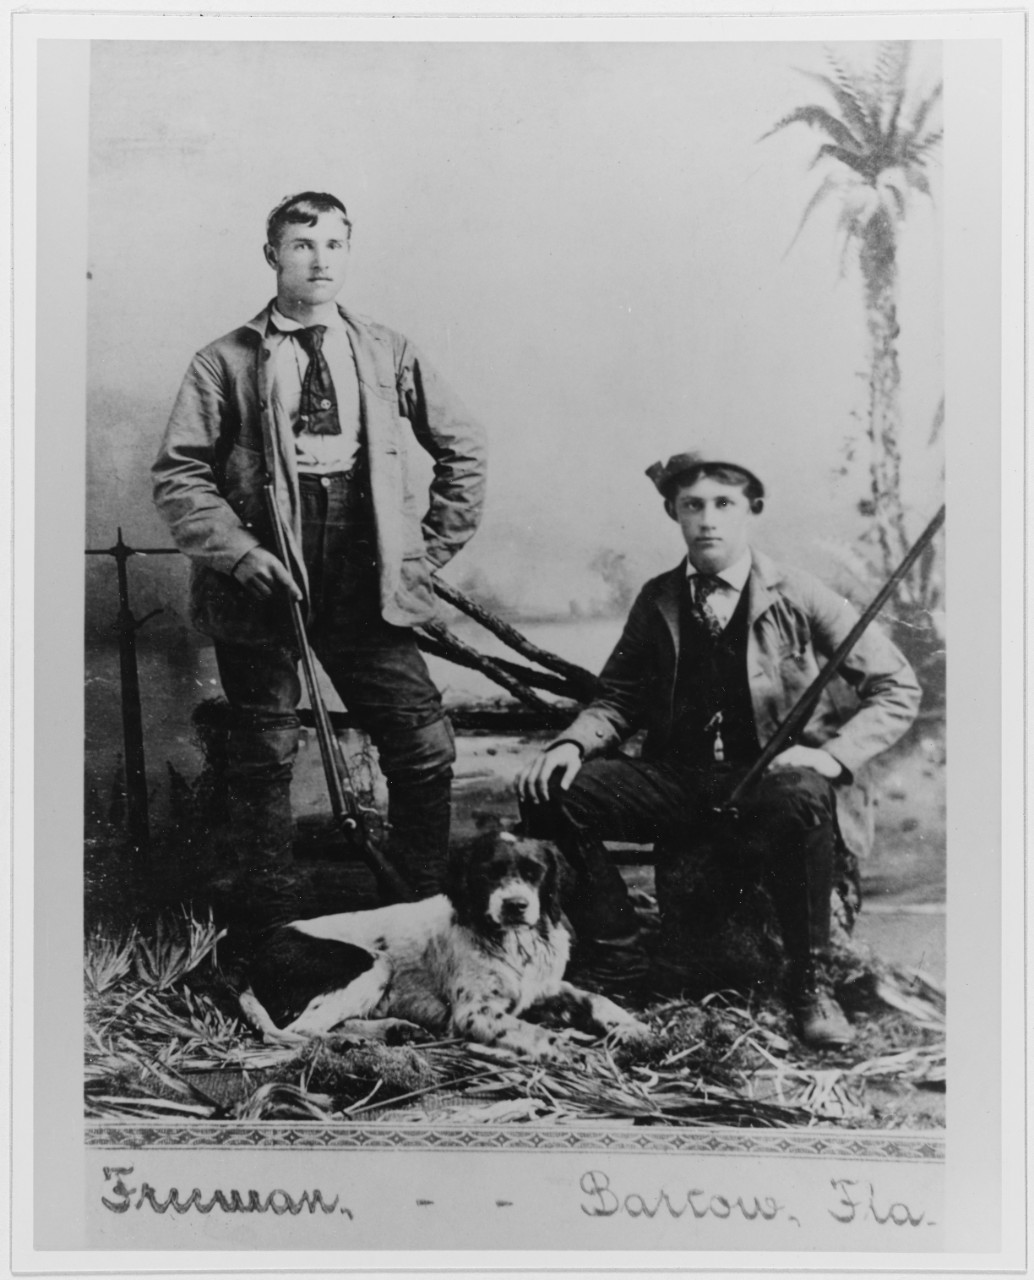 John Hannock Merriam with George M. B. Hawley